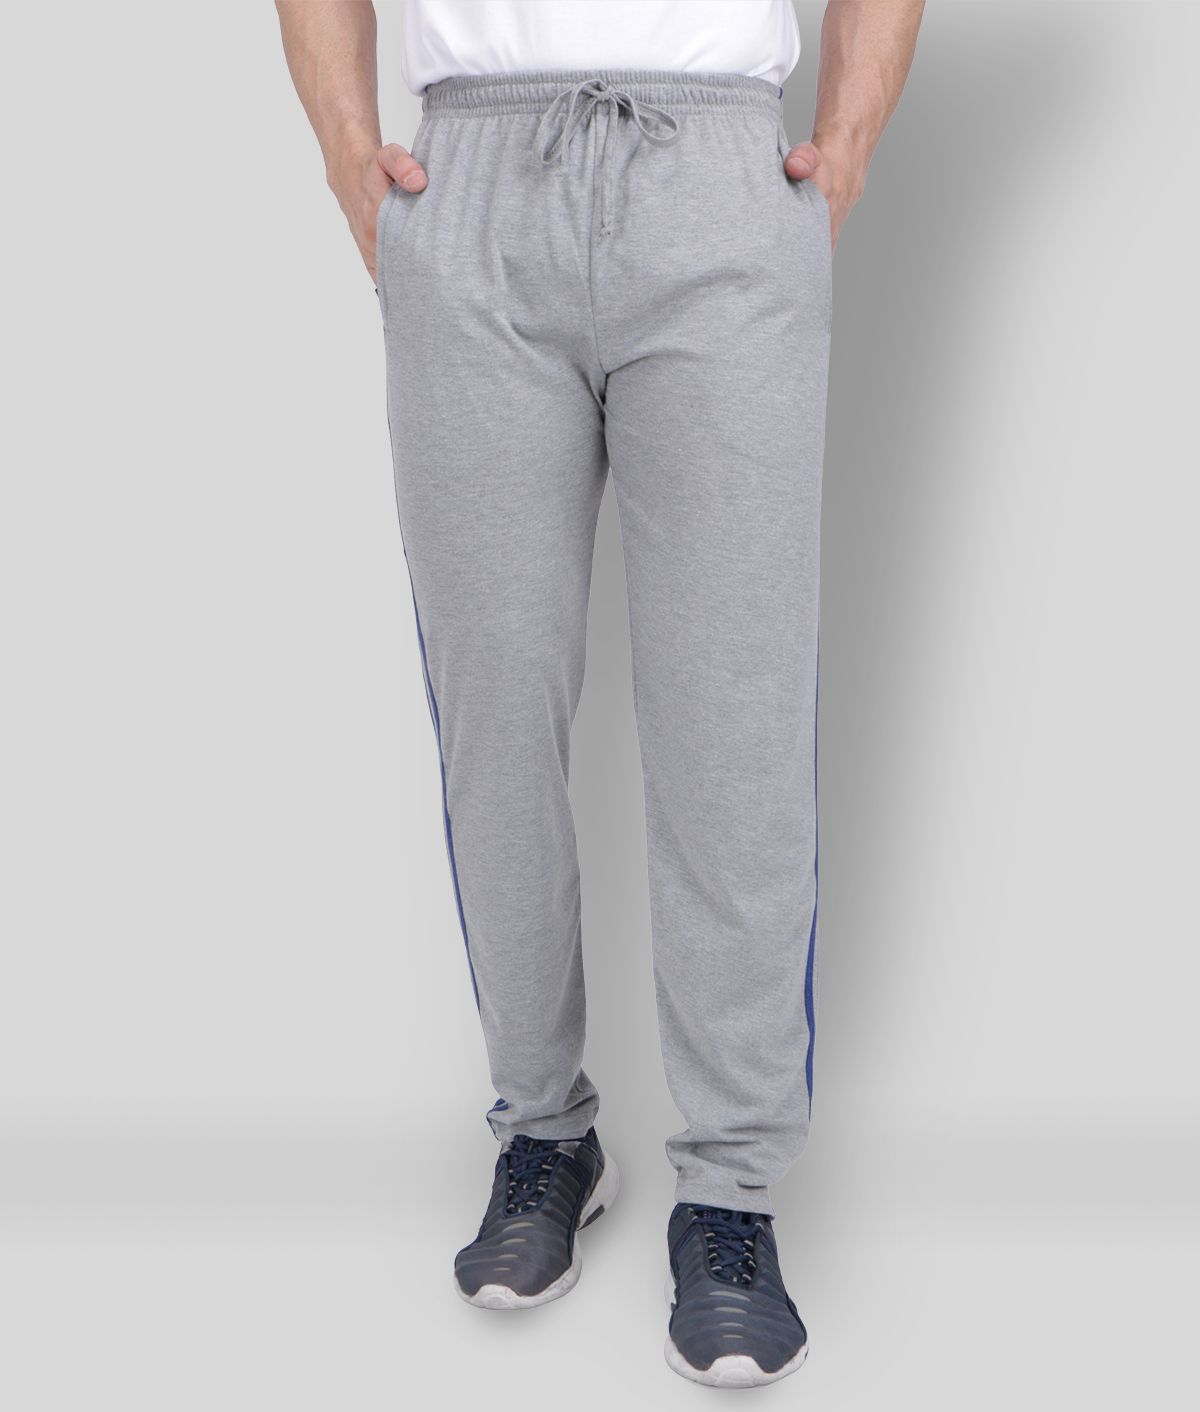 Buy Neo Garments - Light Grey Cotton Men's Trackpants ( Pack of 1 ...